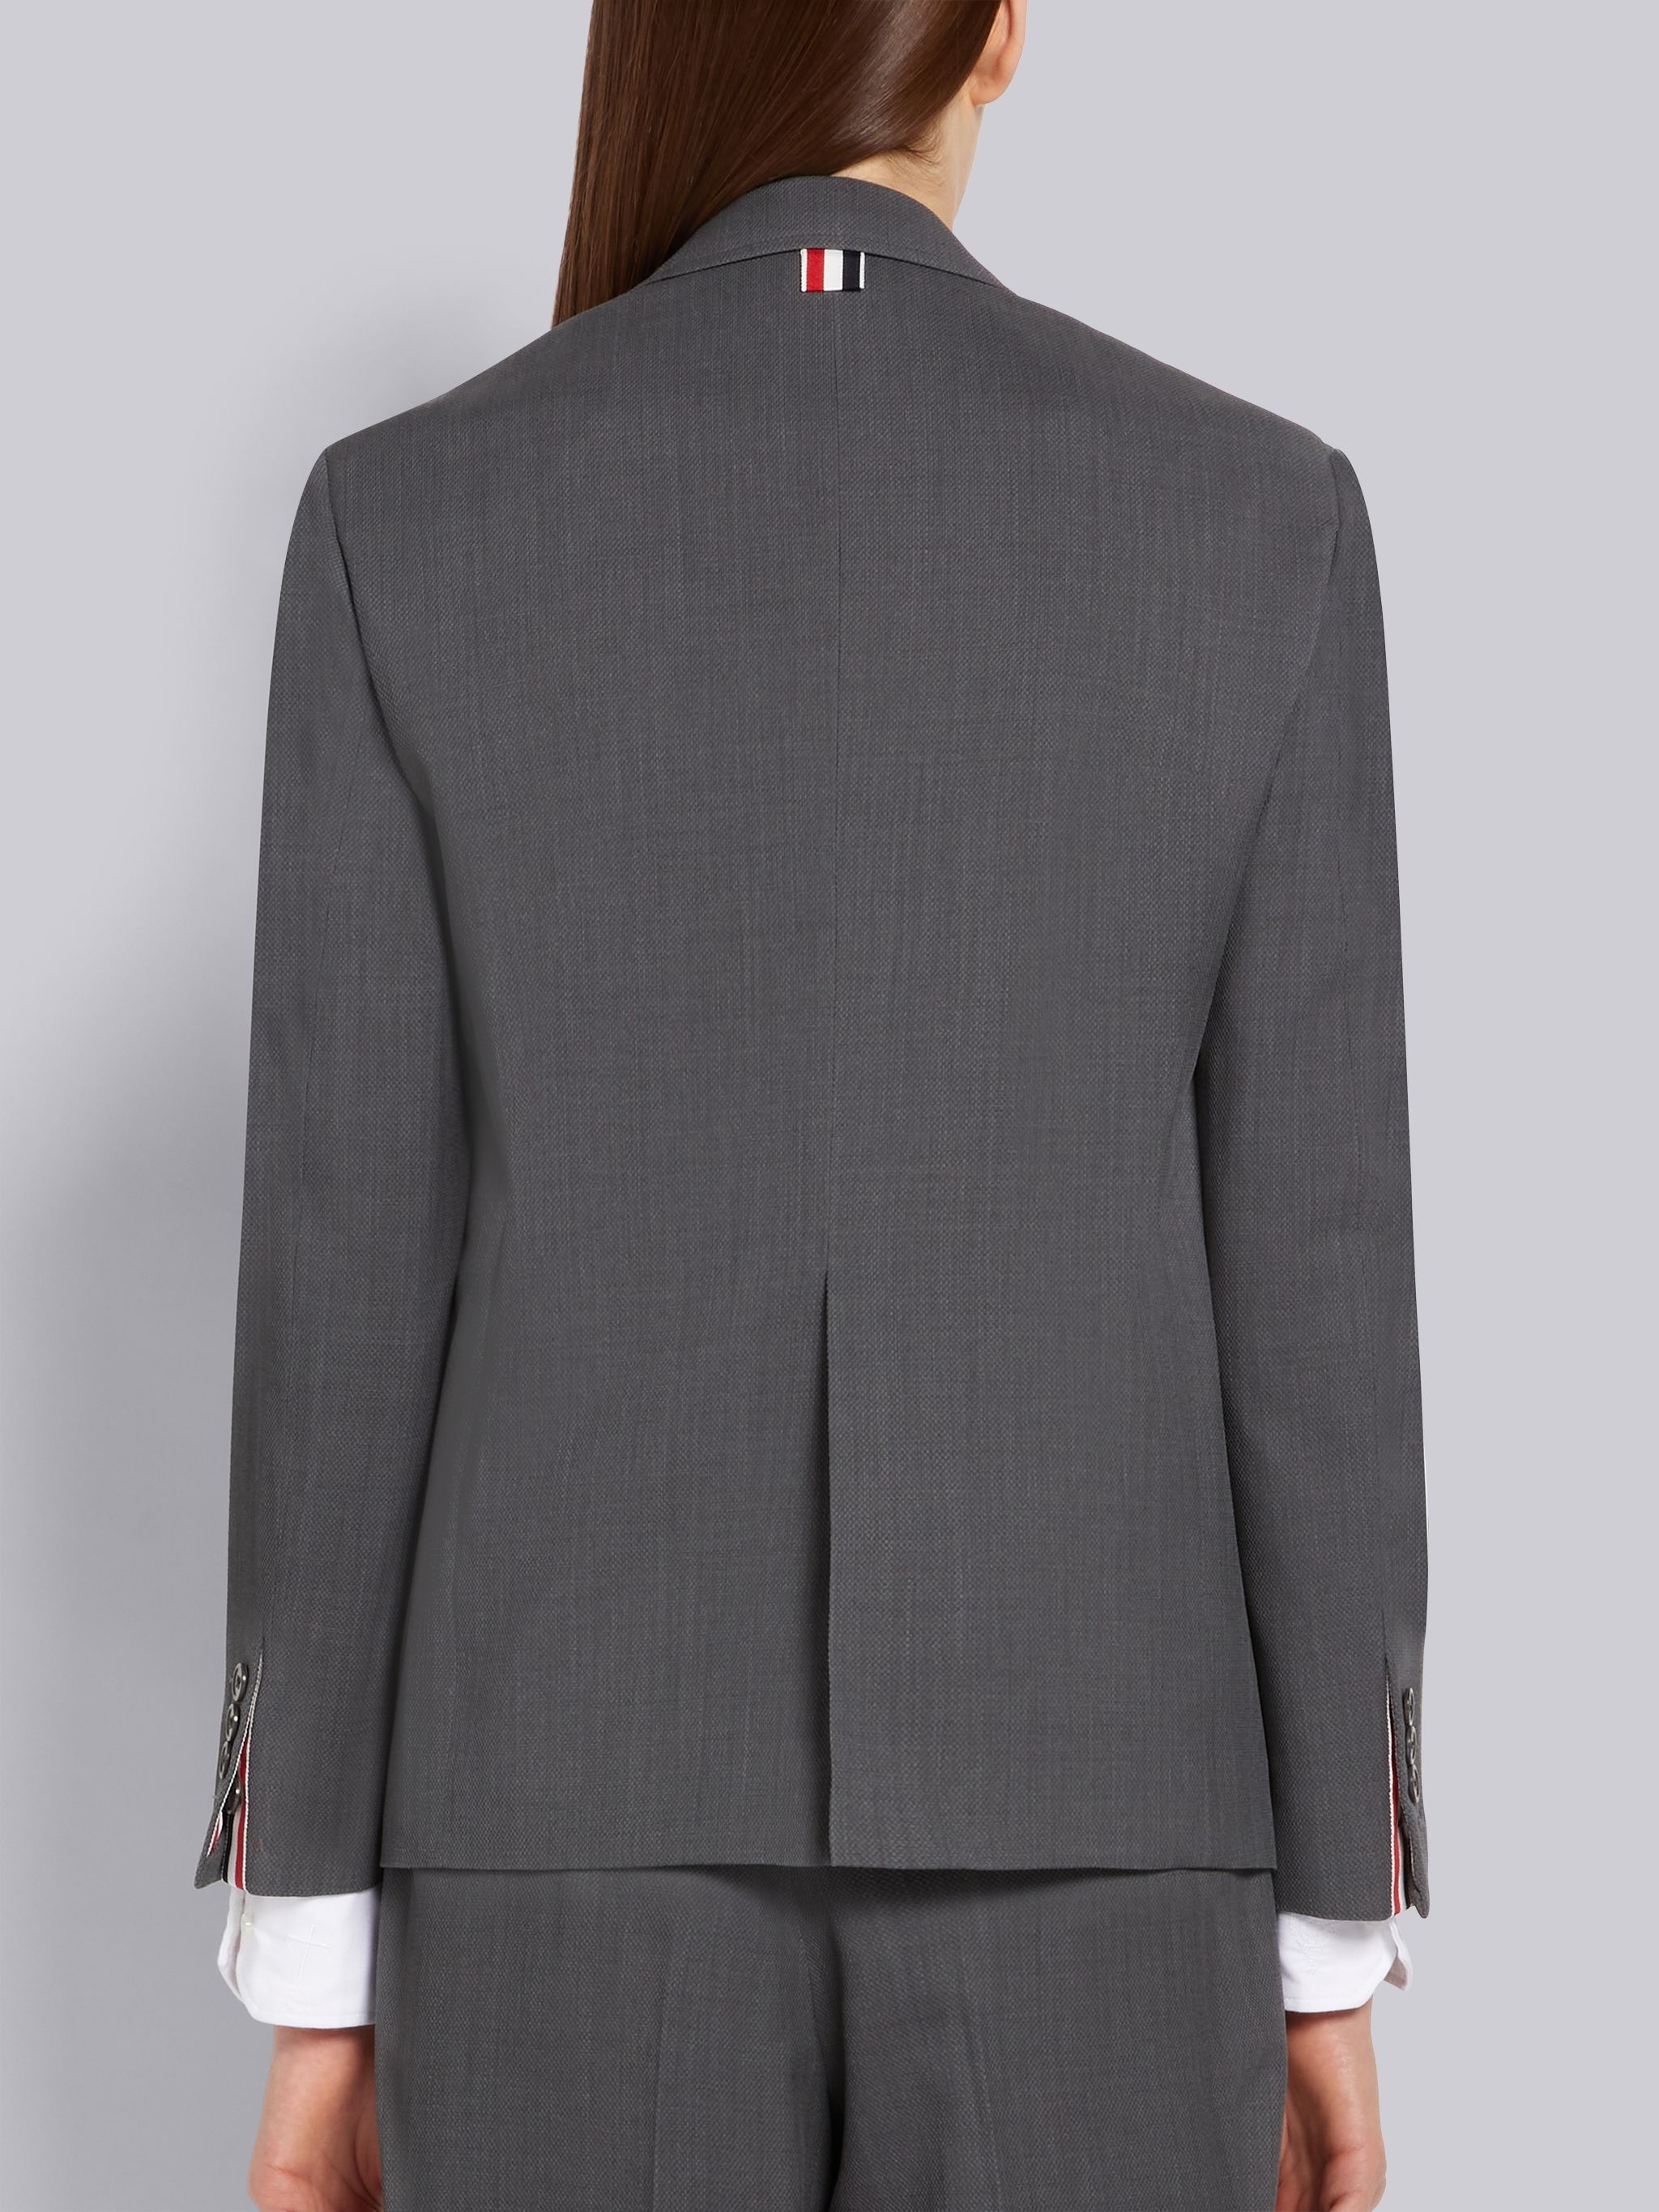 Medium Grey Wool Pique Suiting Single Vent Jacket - 3